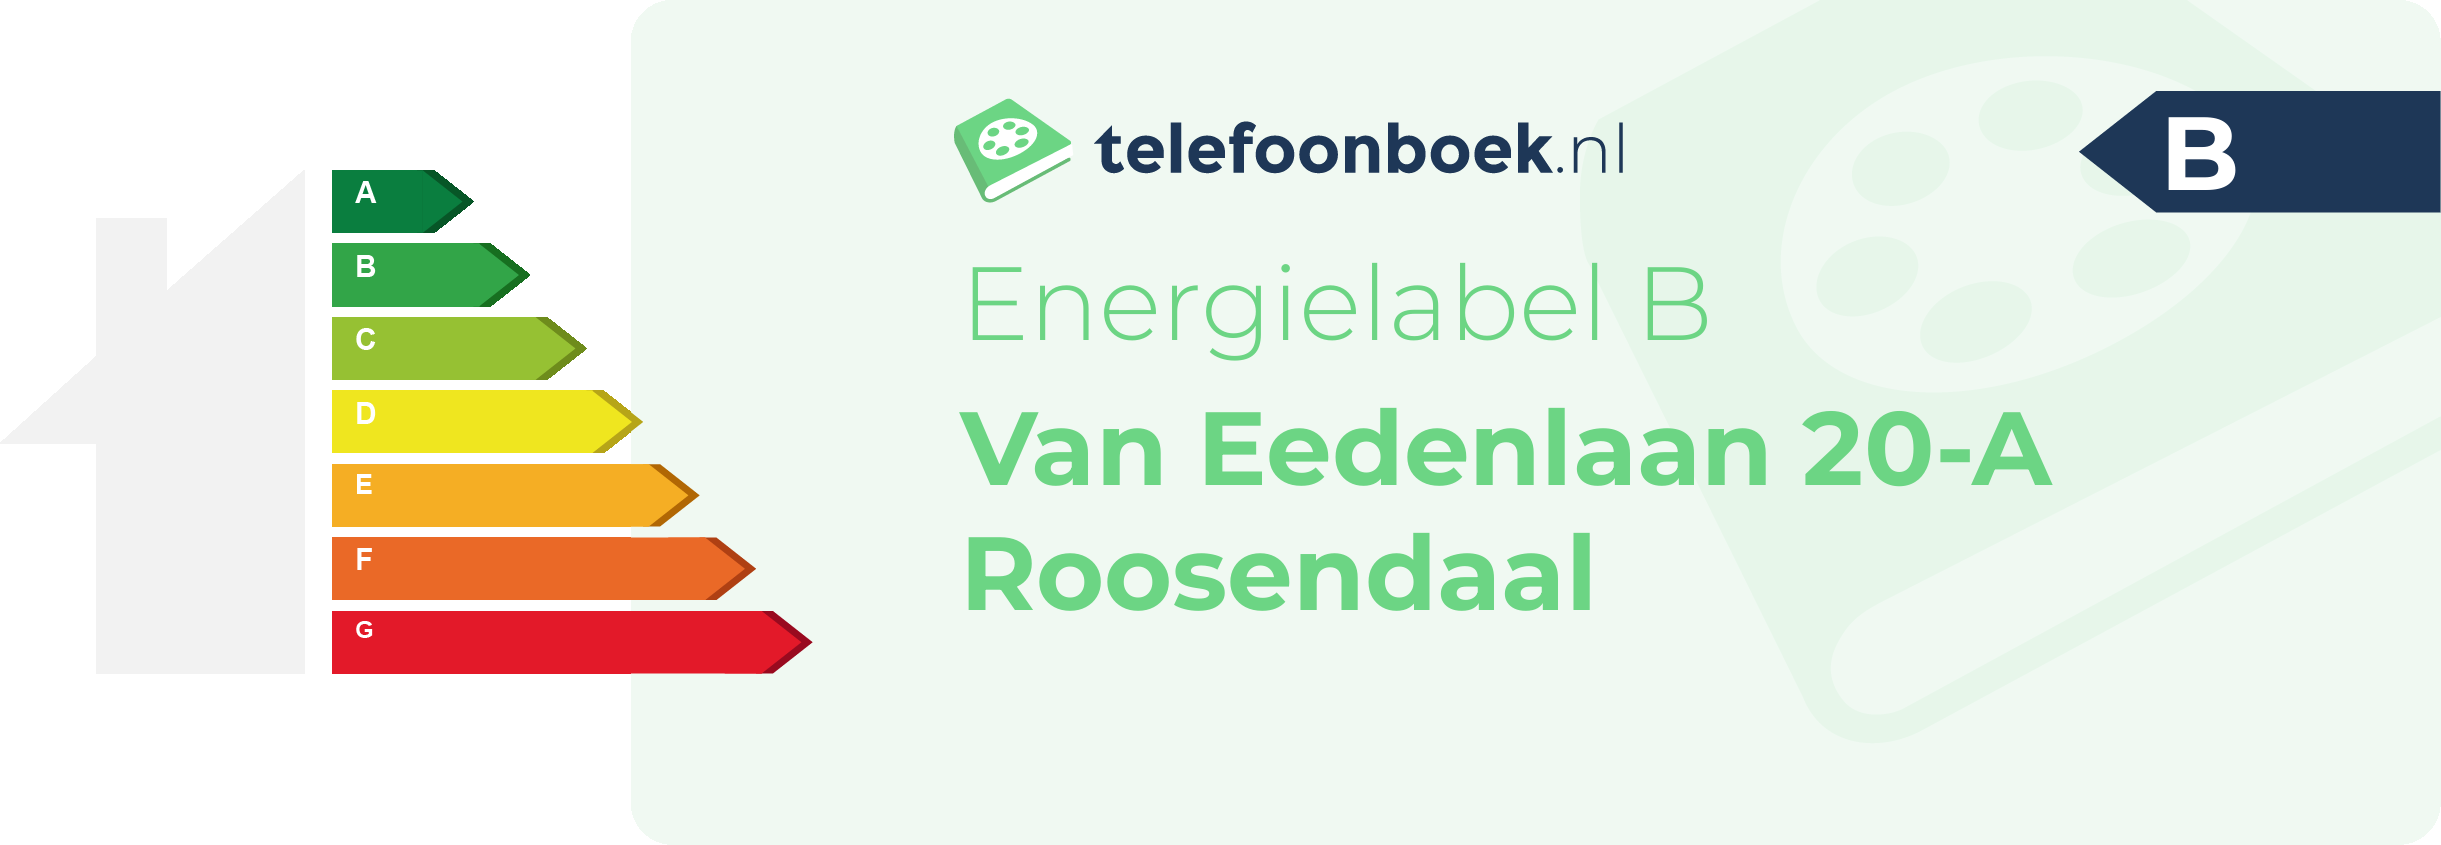 Energielabel Van Eedenlaan 20-A Roosendaal